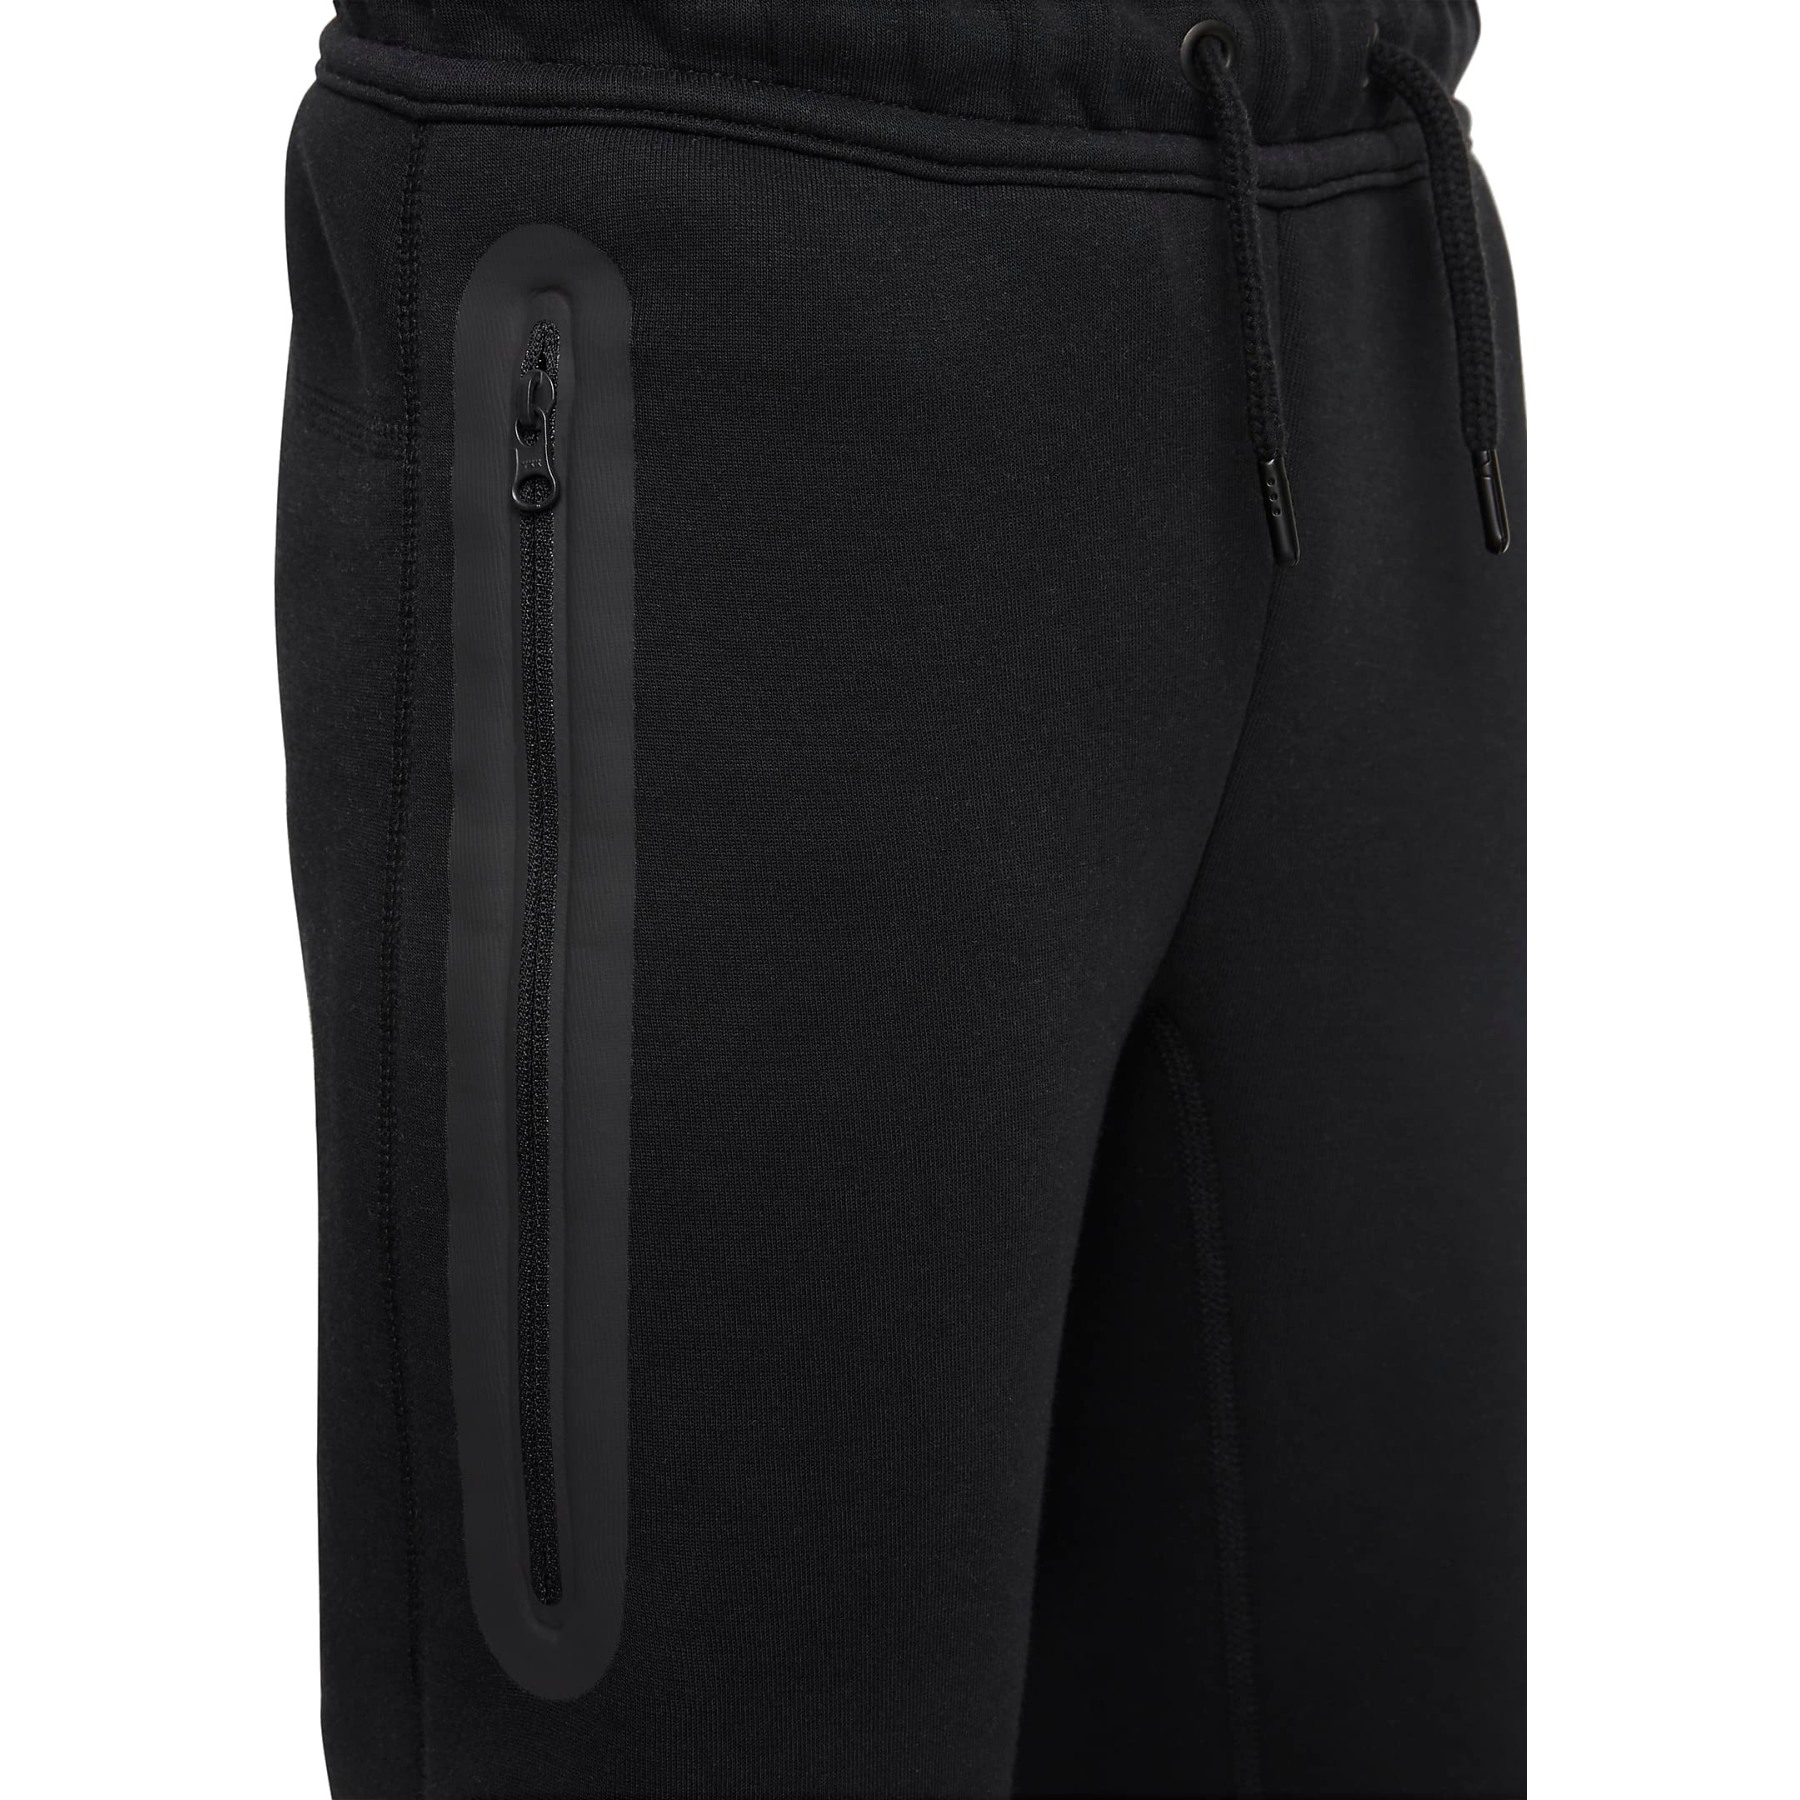 Nike Sportswear Tech Fleece ältere FD3287-010 - für Hose Kinder schwarz/schwarz/schwarz